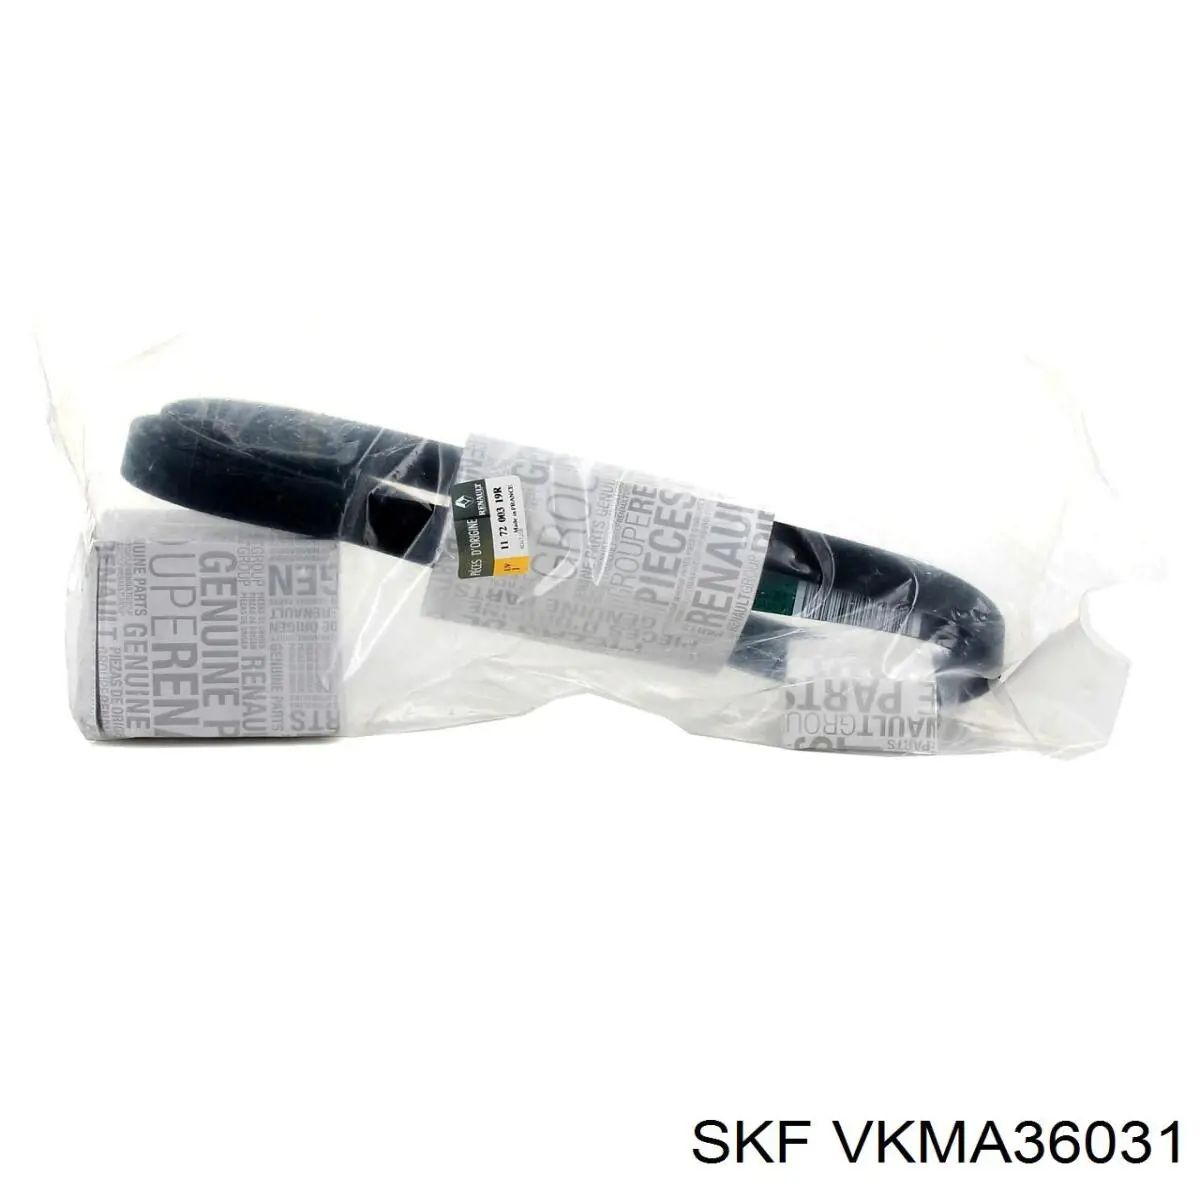 VKMA36031 SKF 